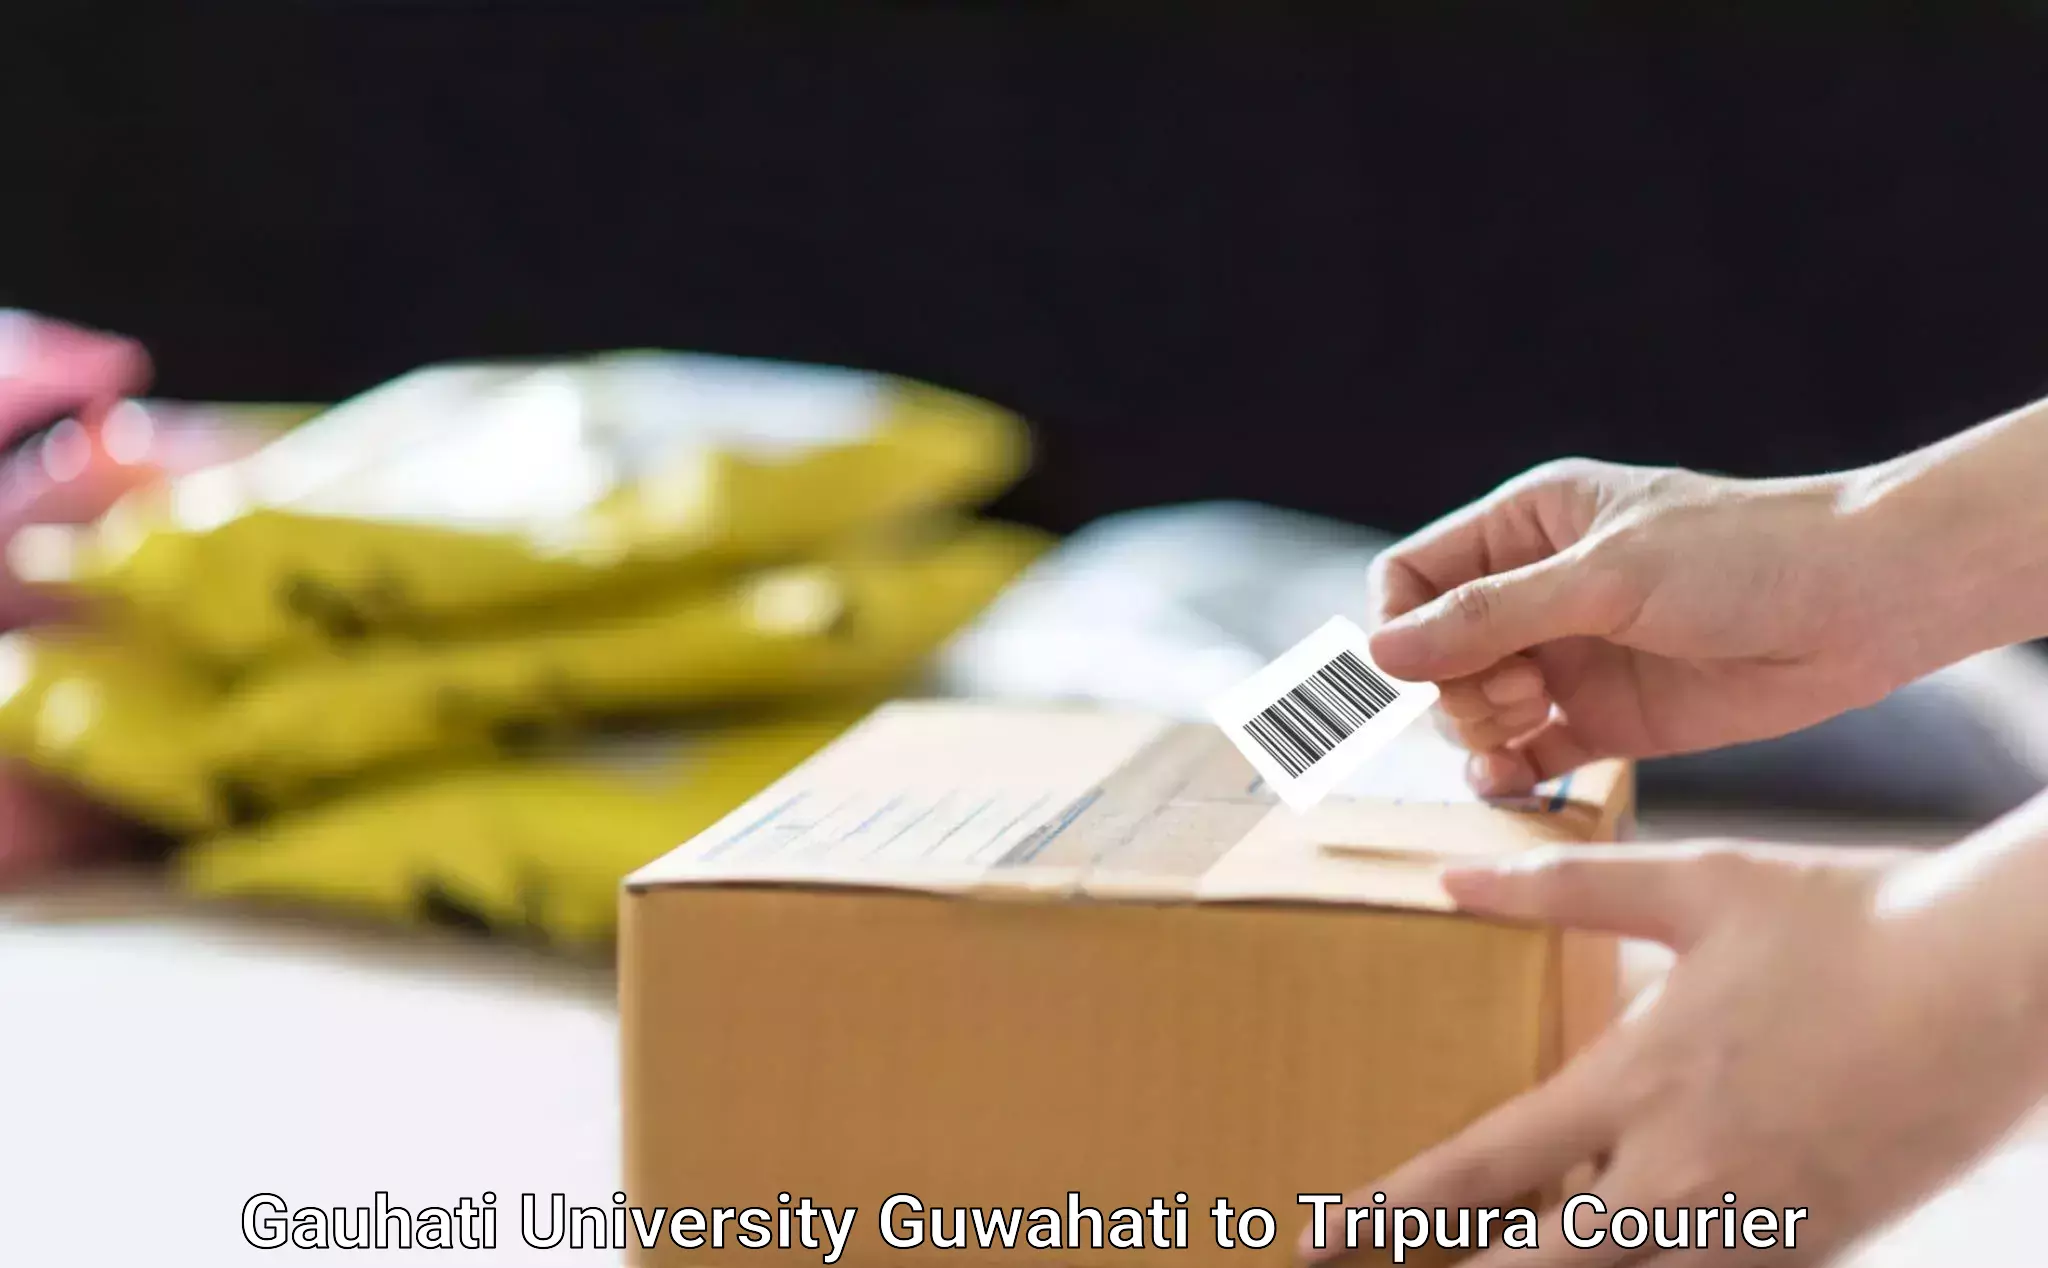 Courier service innovation Gauhati University Guwahati to Bishalgarh